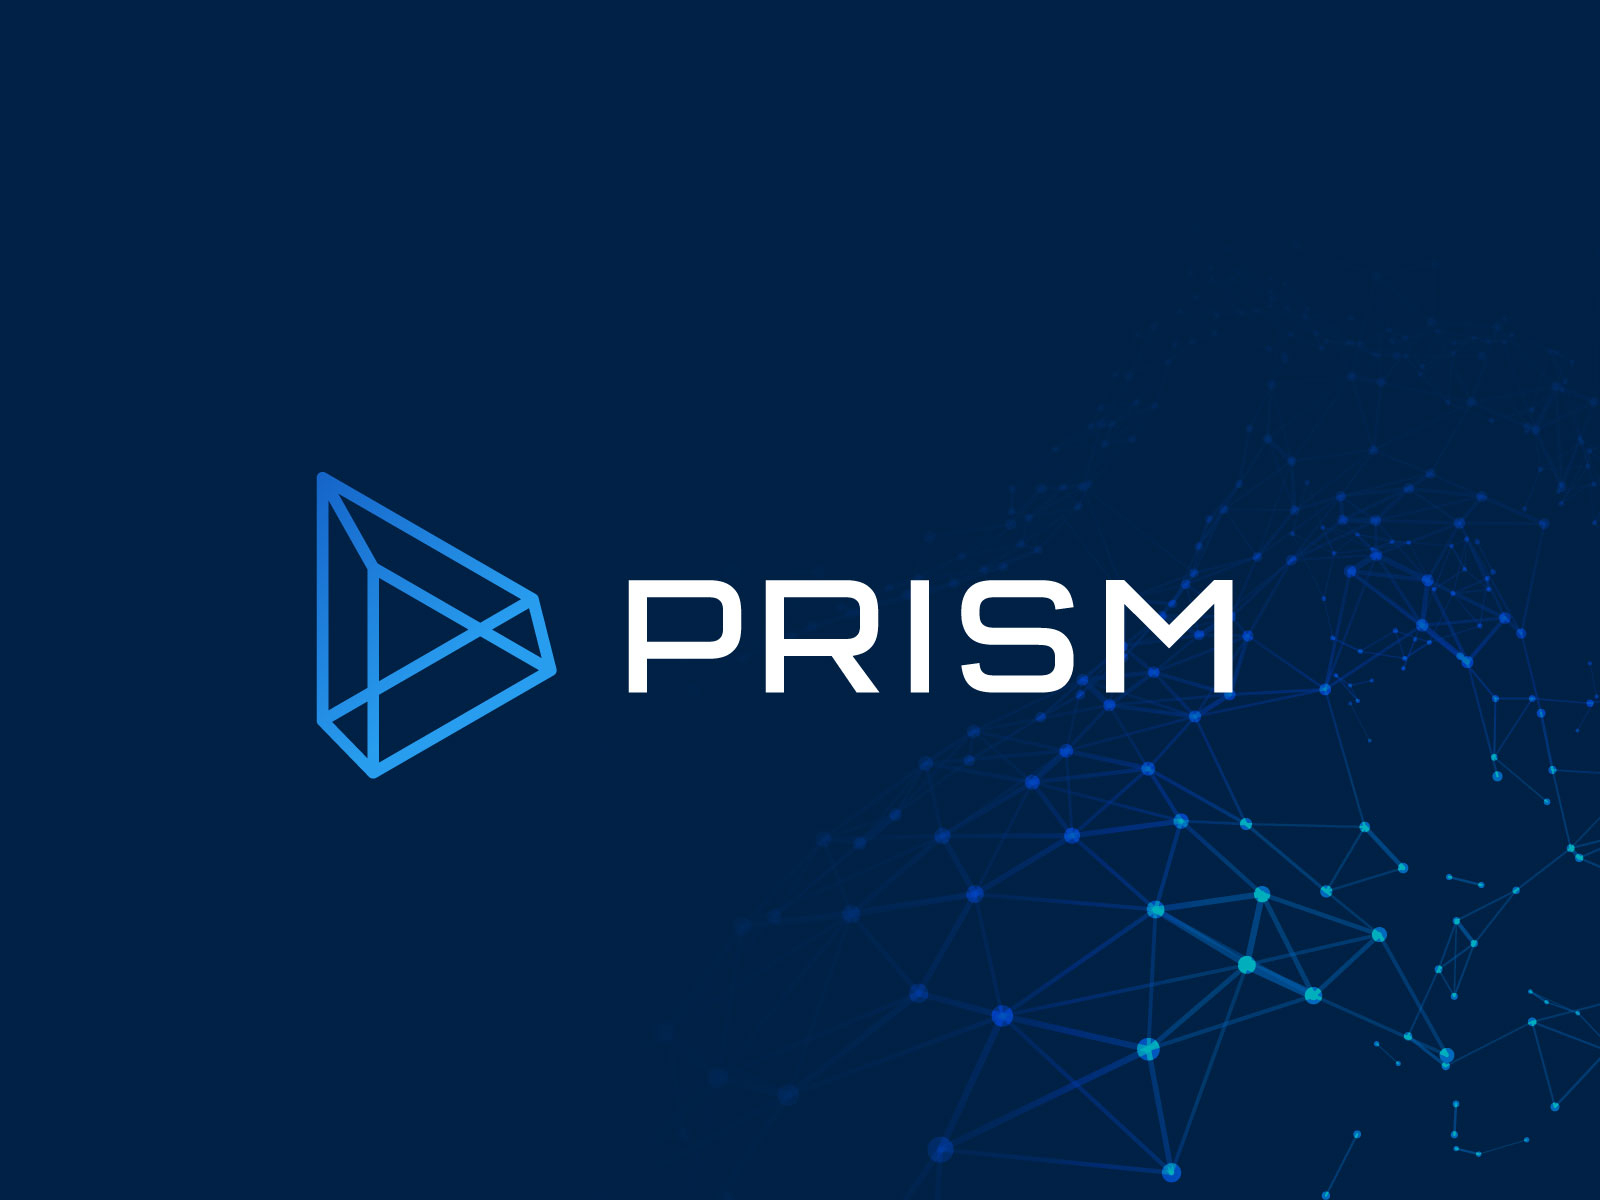 File:PRISM logo.jpg - Wikipedia